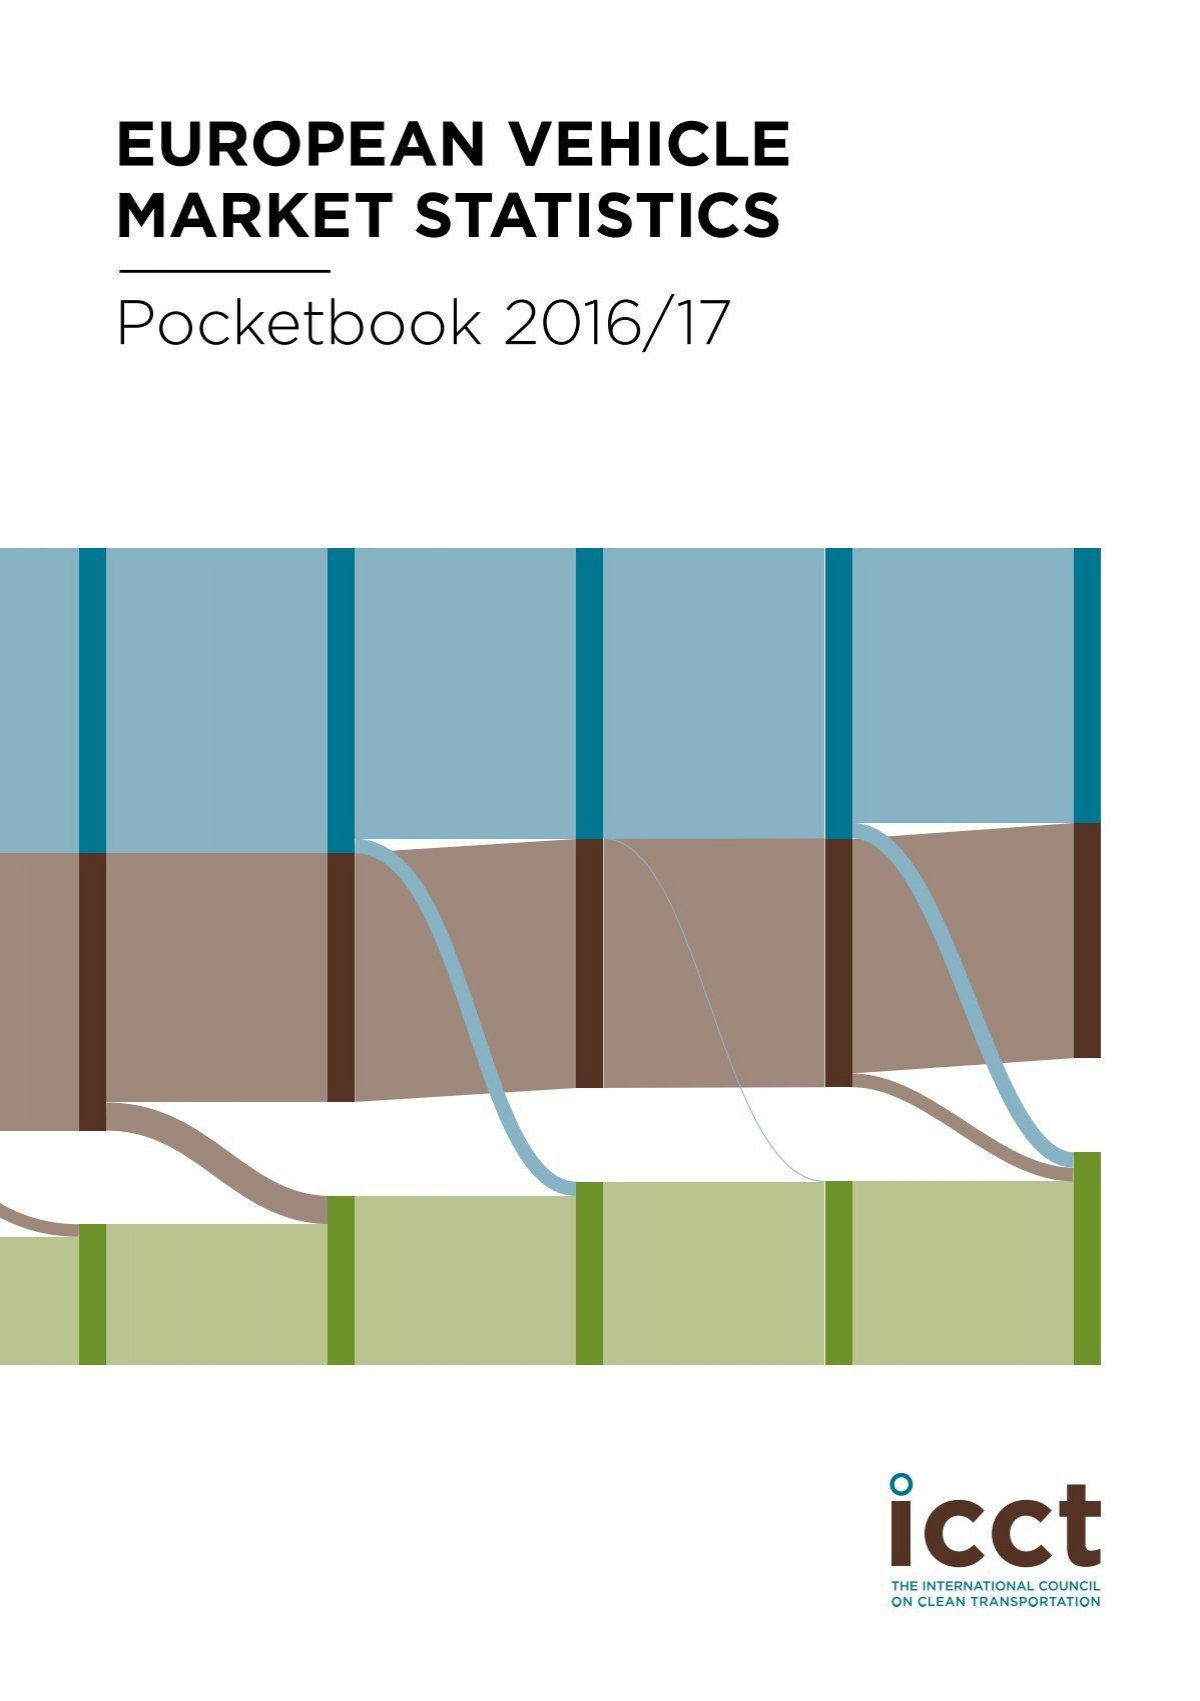 EUROPEAN VEHICLE MARKET STATISTICS Pocketbook 2016/17